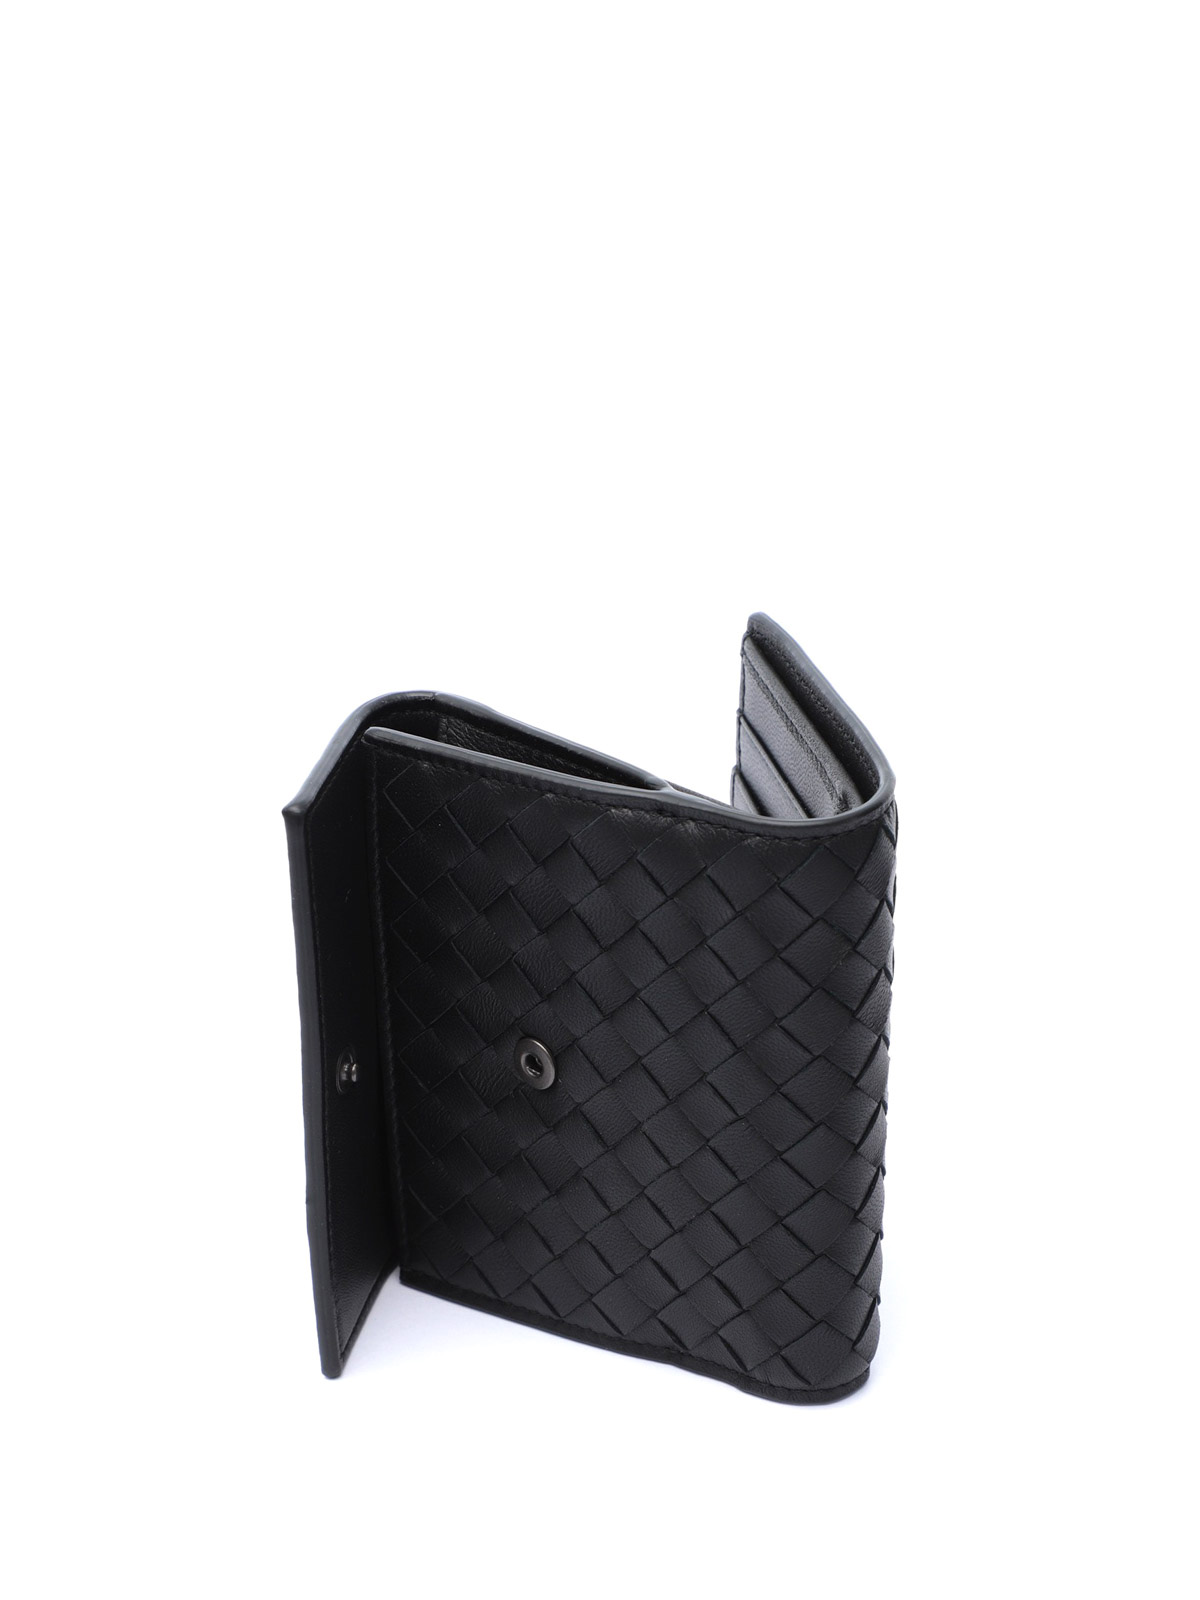 BOTTEGA VENETA Intrecciato pebbled-leather wallet, Sale up to 70% off